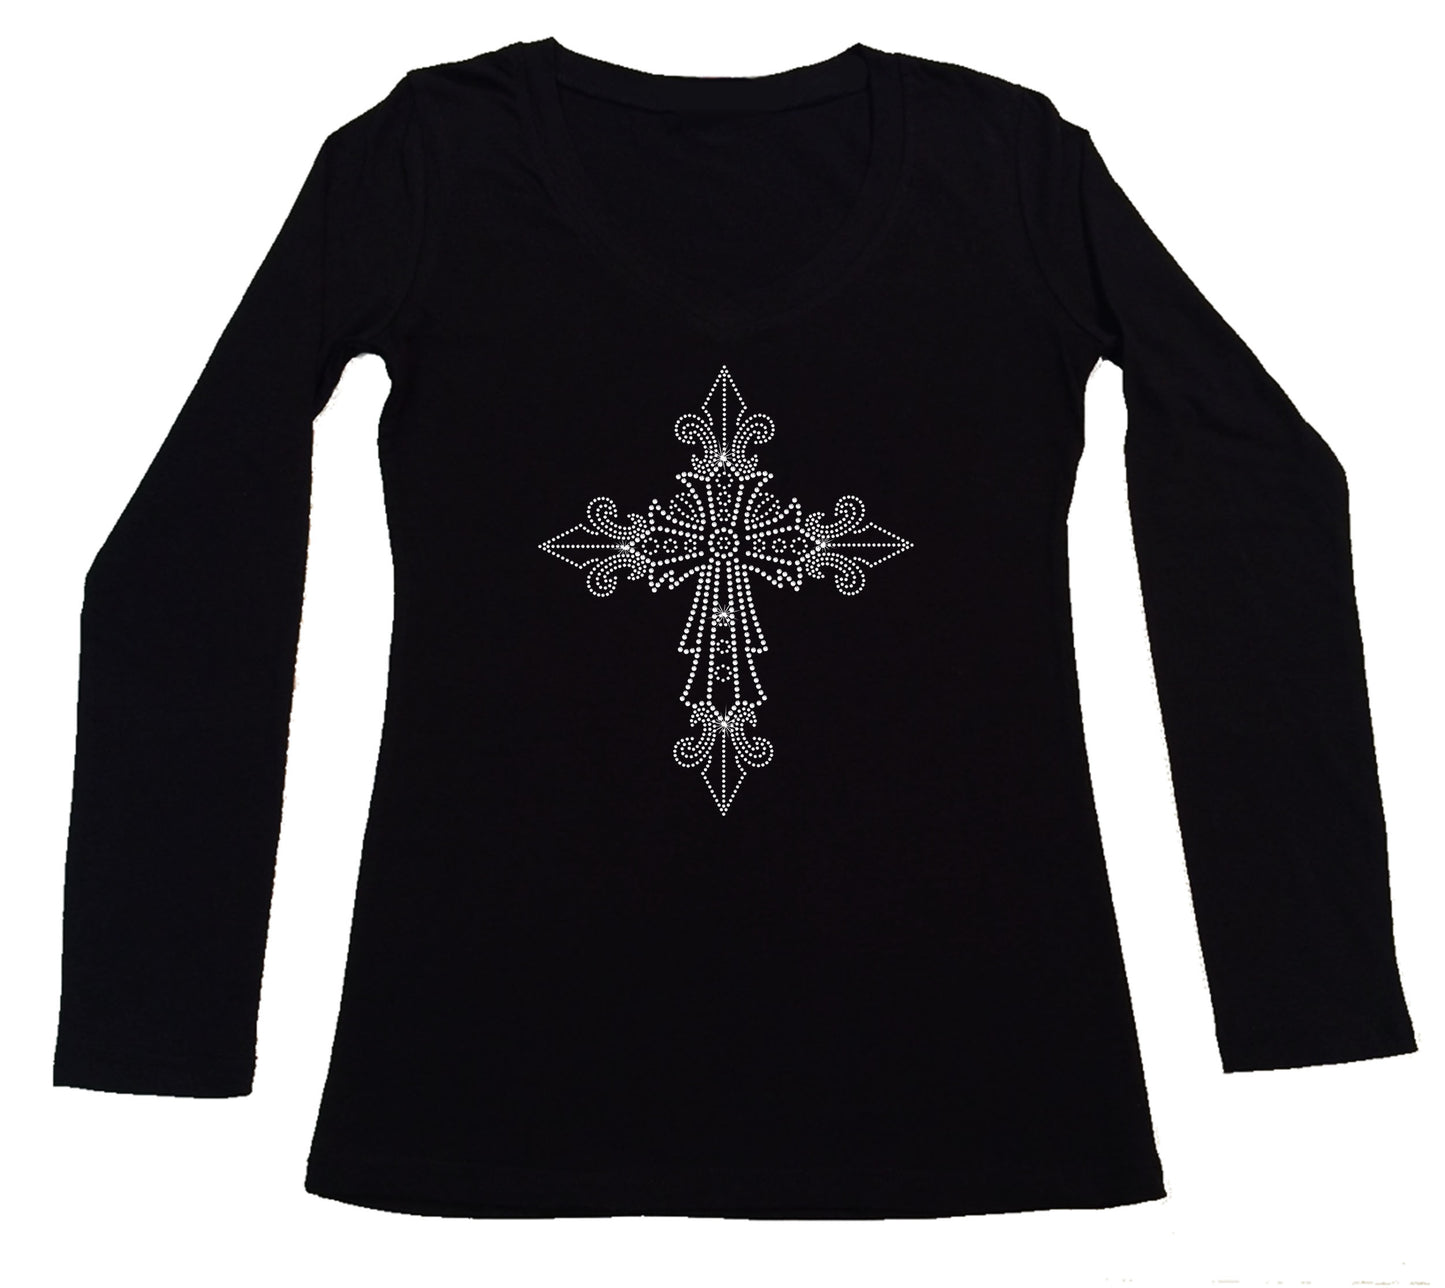 Women's Rhinestone Fitted Tight Snug Shirt Pointed Crystal Cross - Rhinestone Shirt, Jesus Bling